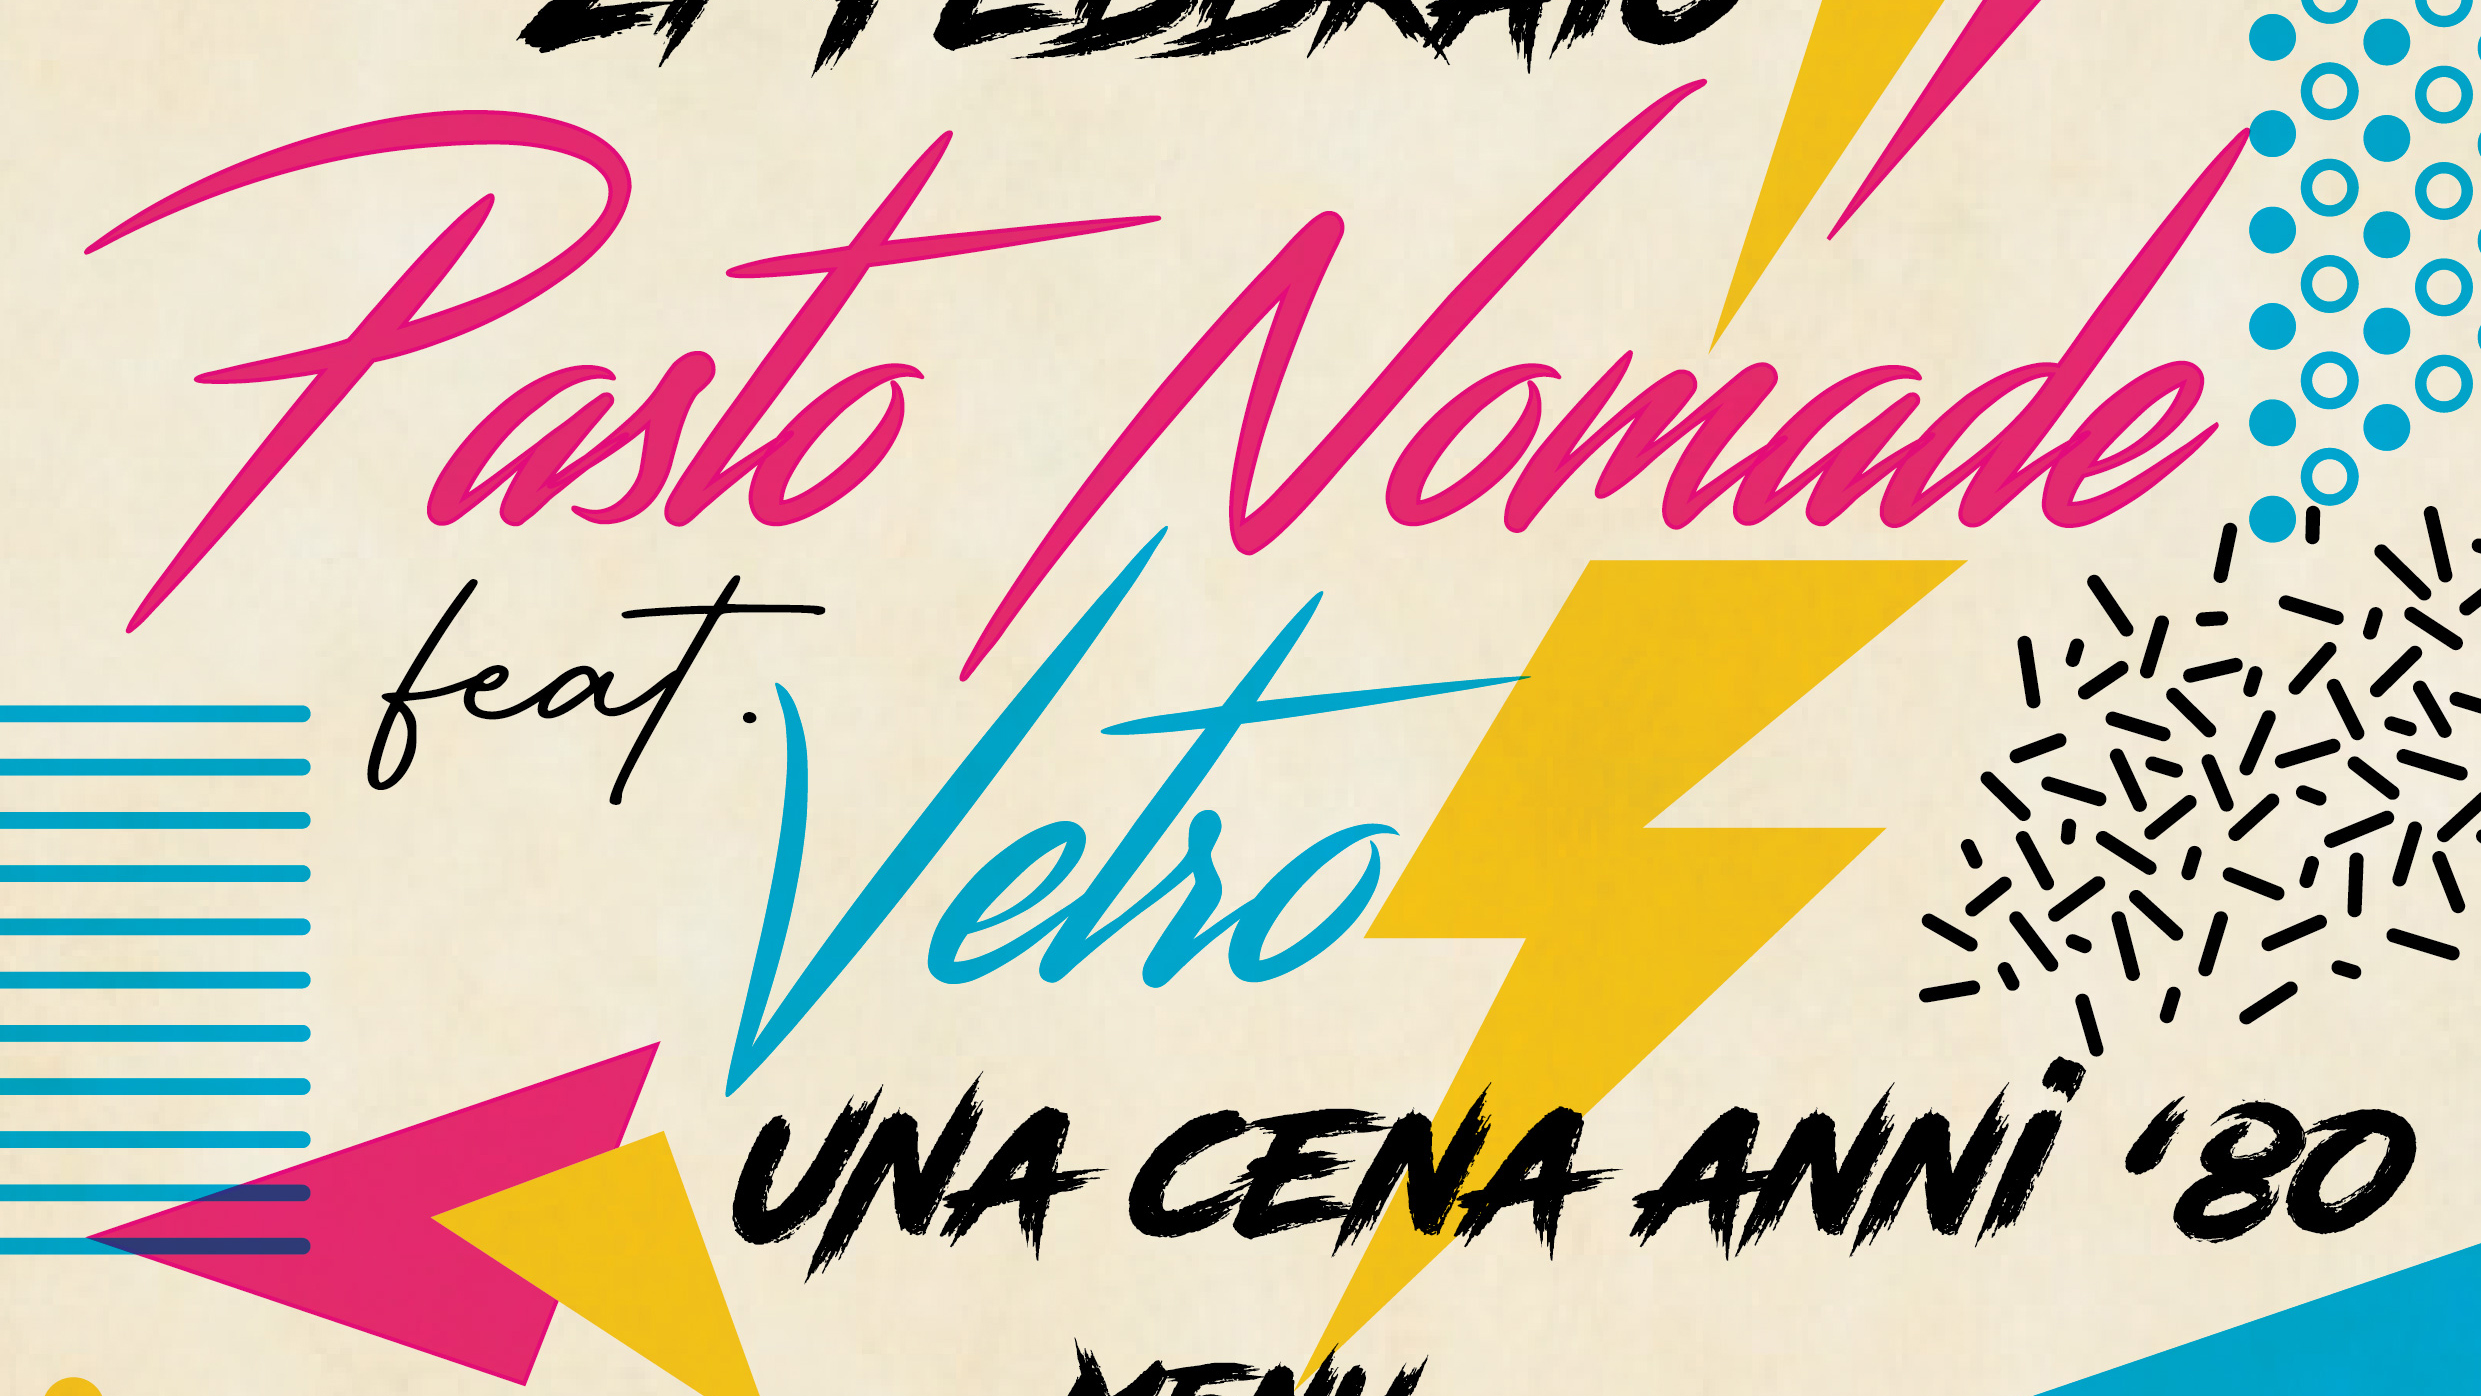 Pasto Nomade feat. Vetro!